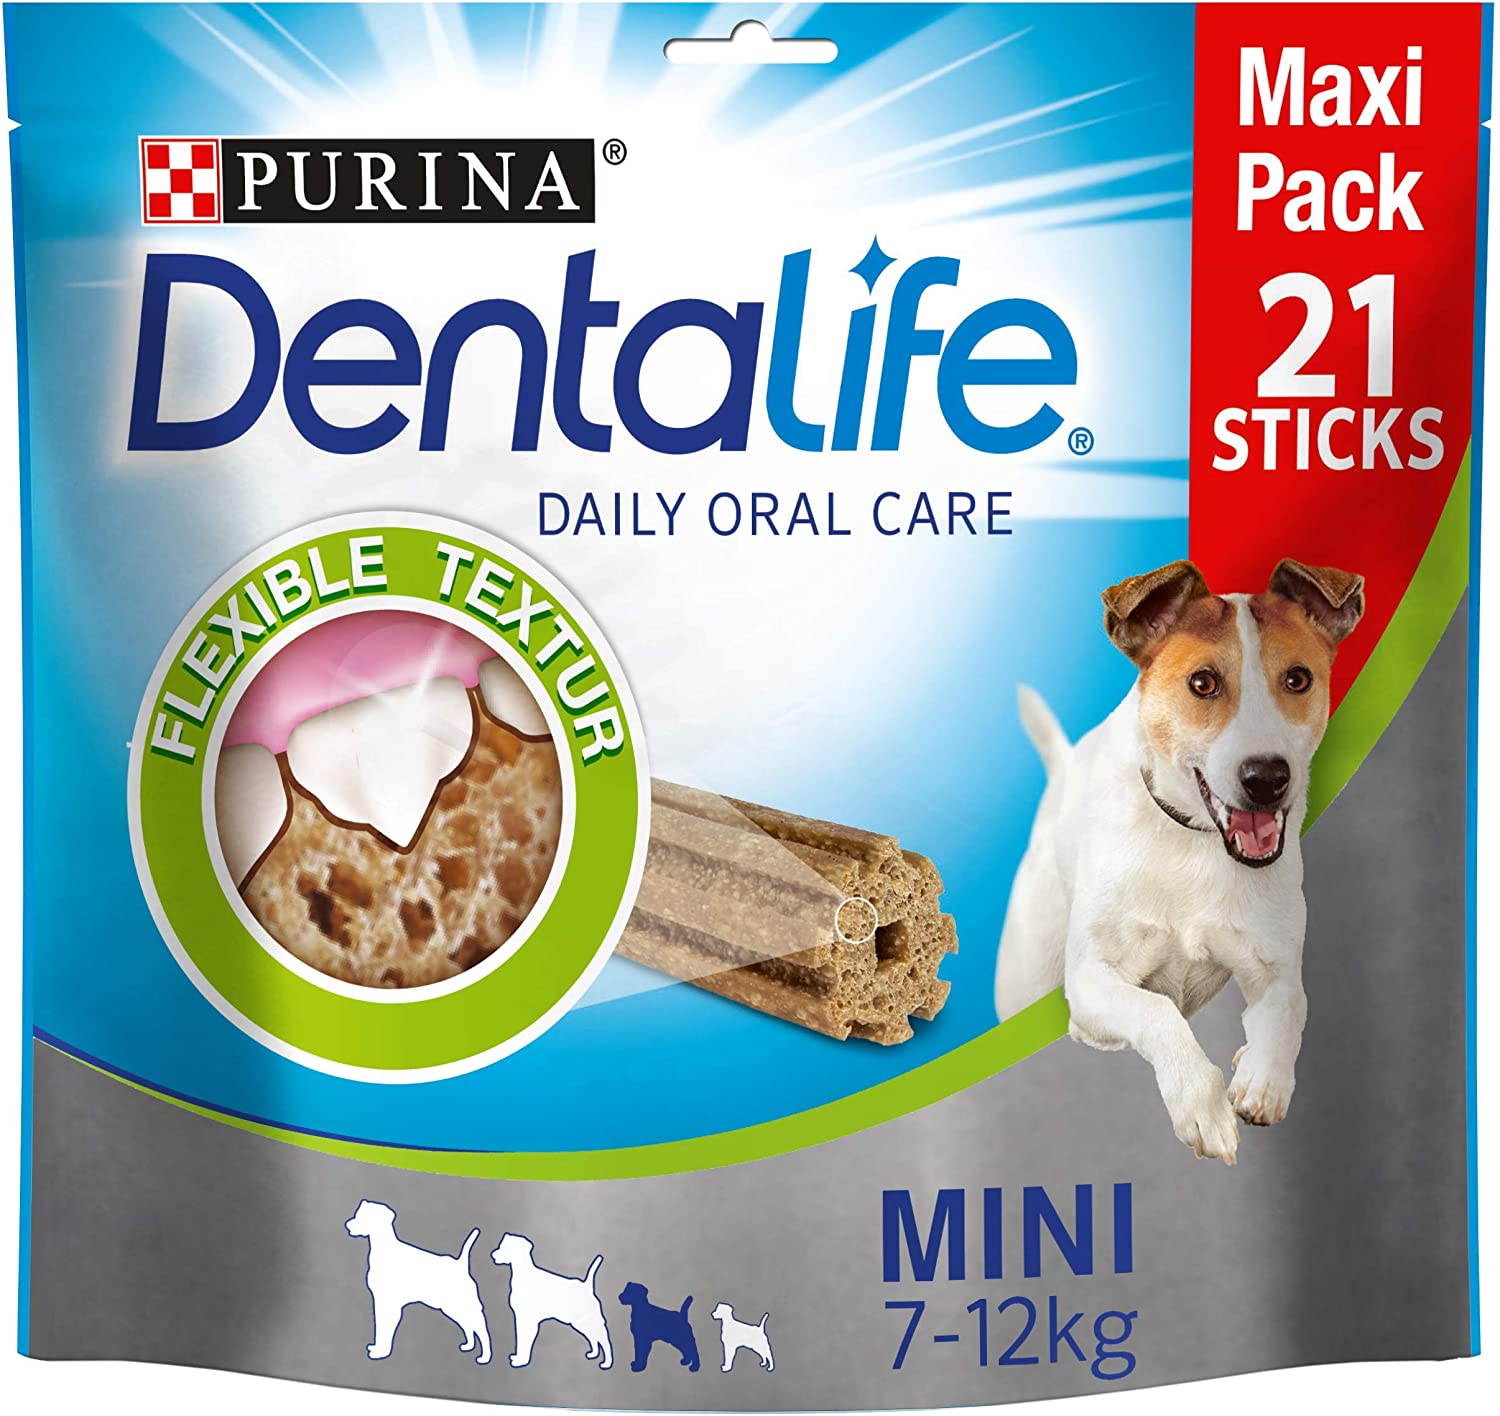  Purina DentaLife - Aperitivos de cuidado dental diario para perros, Pack of 4 x 350gr 